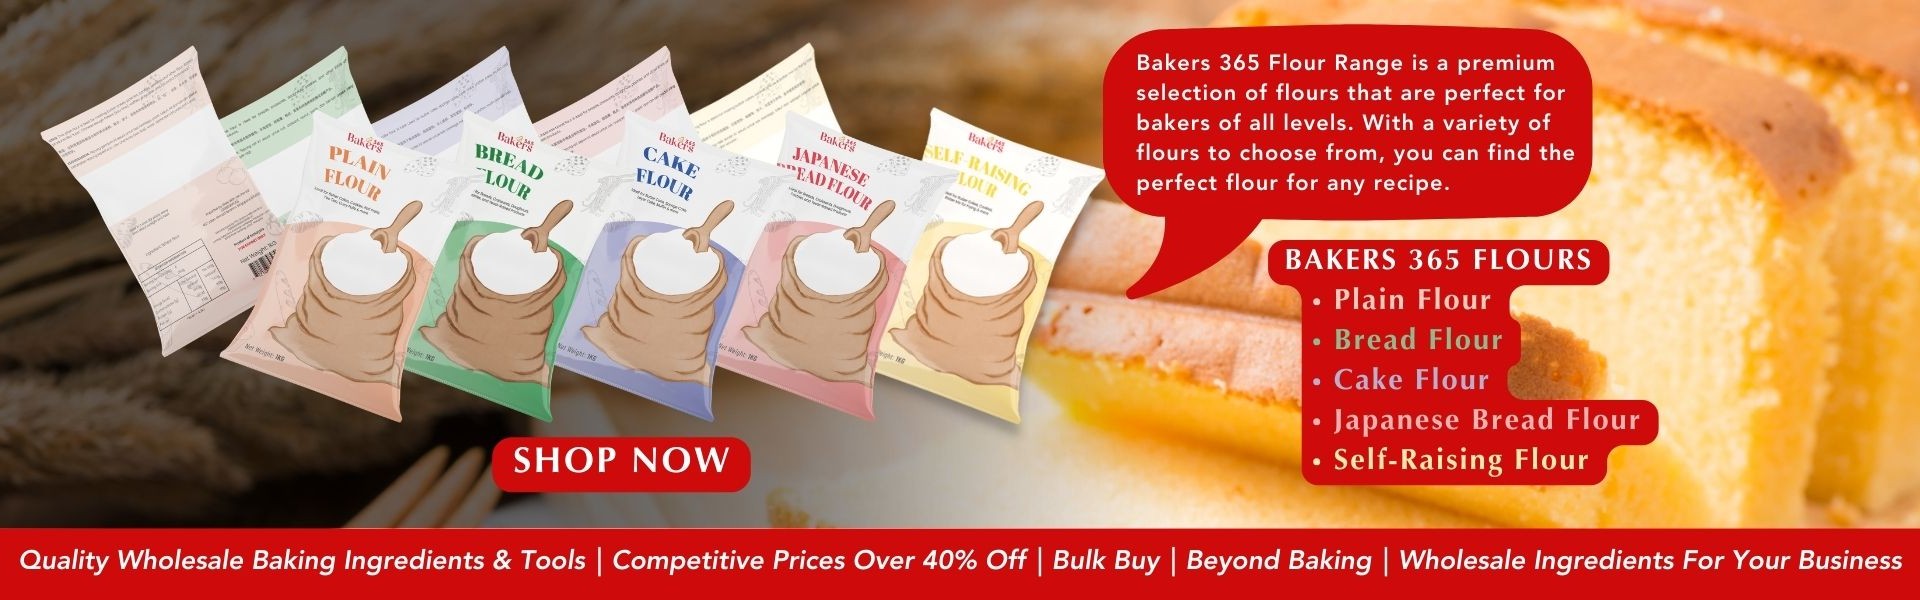 Bakers 365 Flours